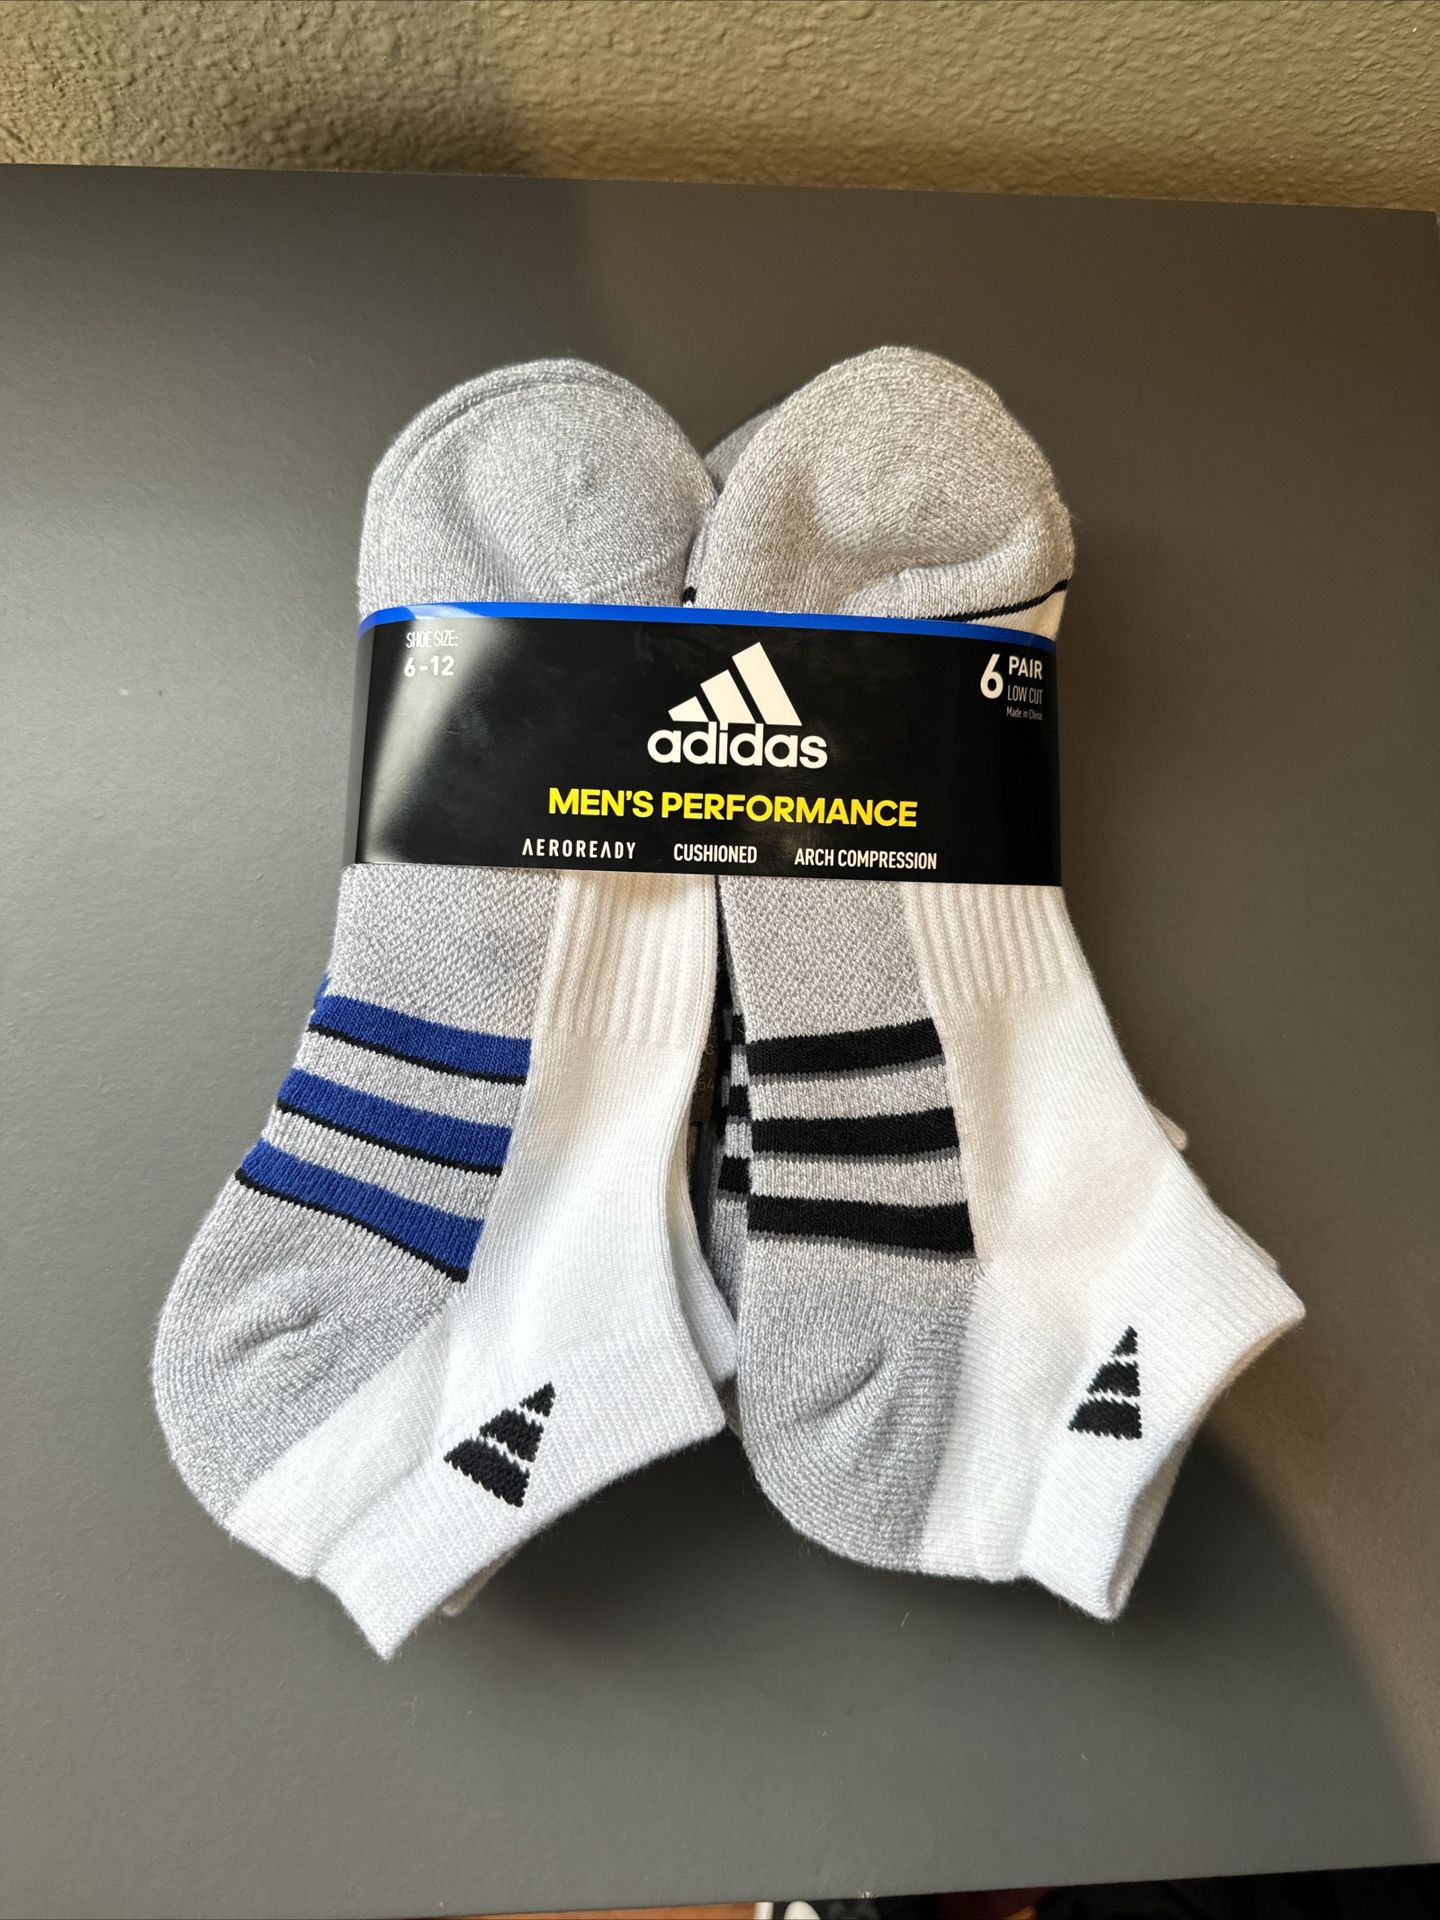 Adidas Men’s Performance Socks 